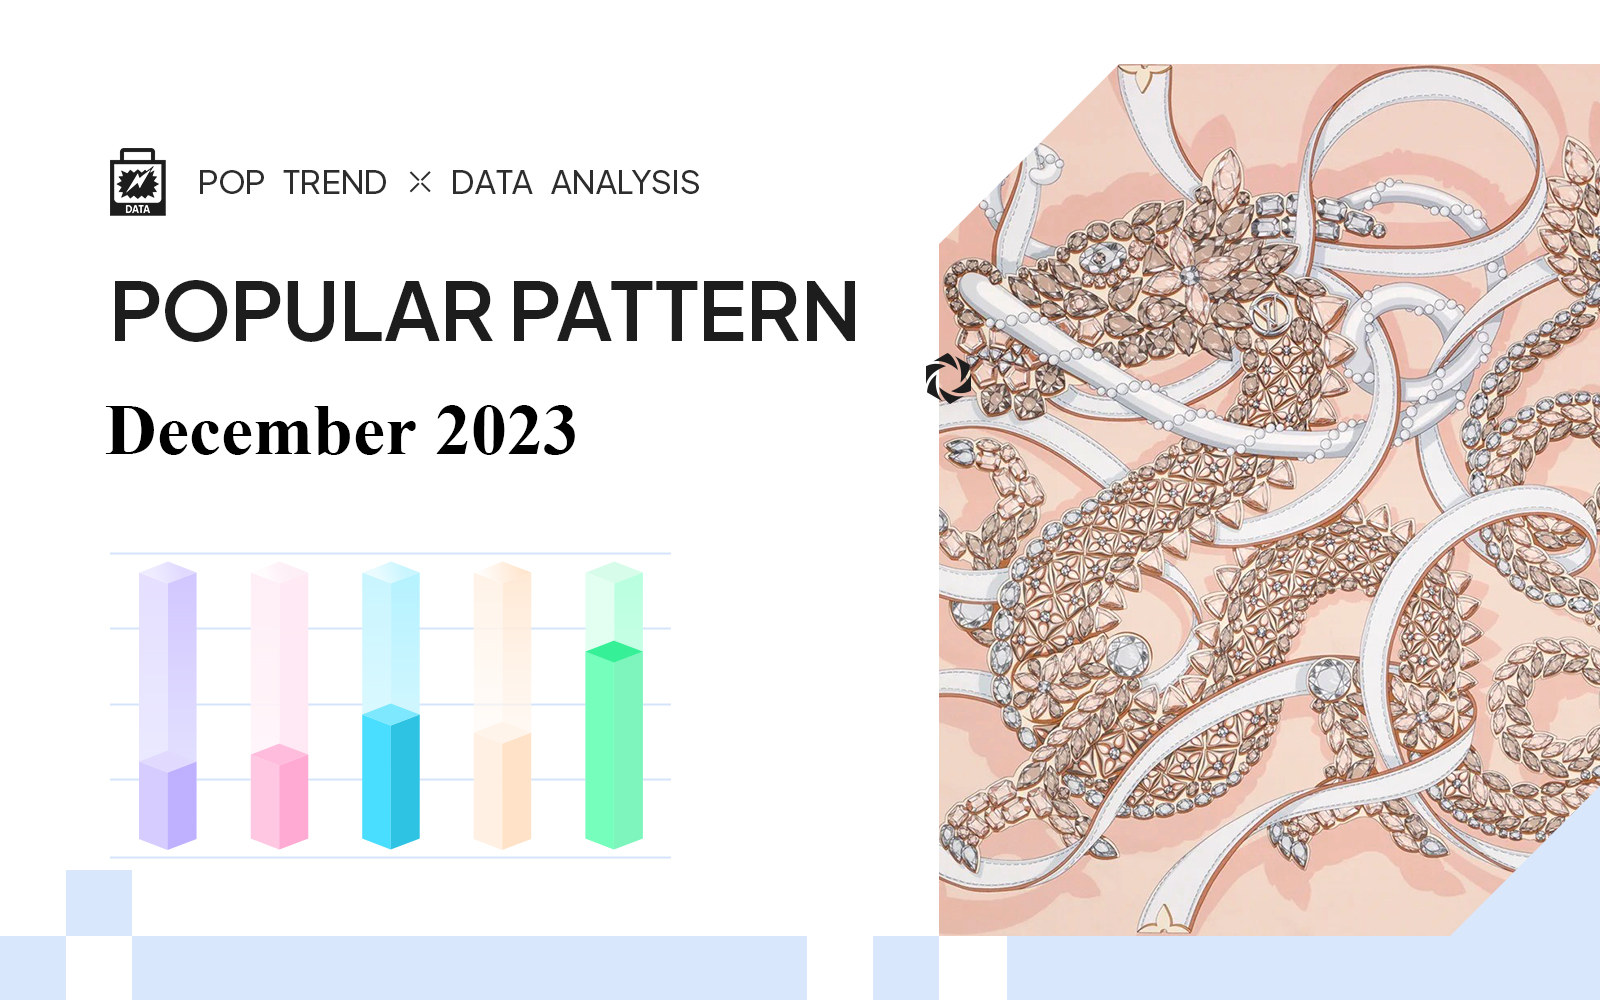 The Popular Pattern Analysis in December 2023